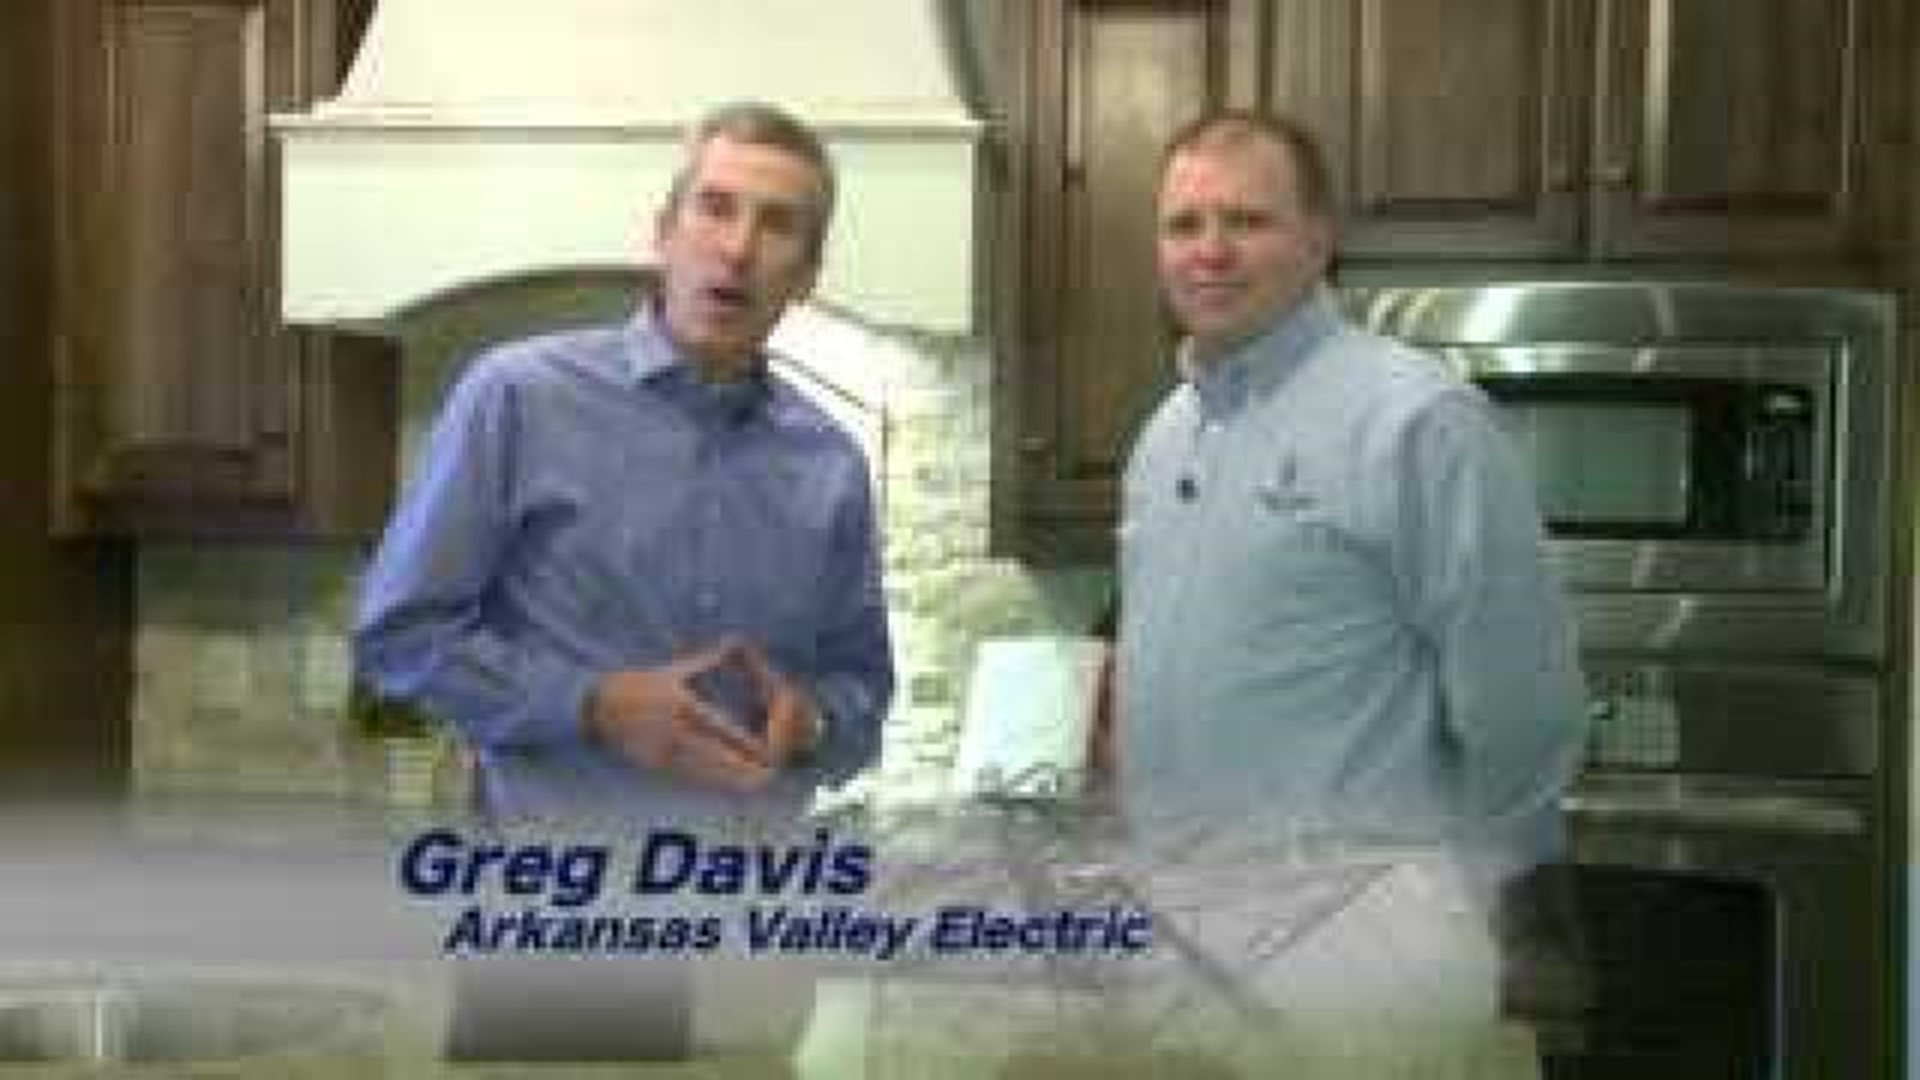 Arkansas Valley Electric